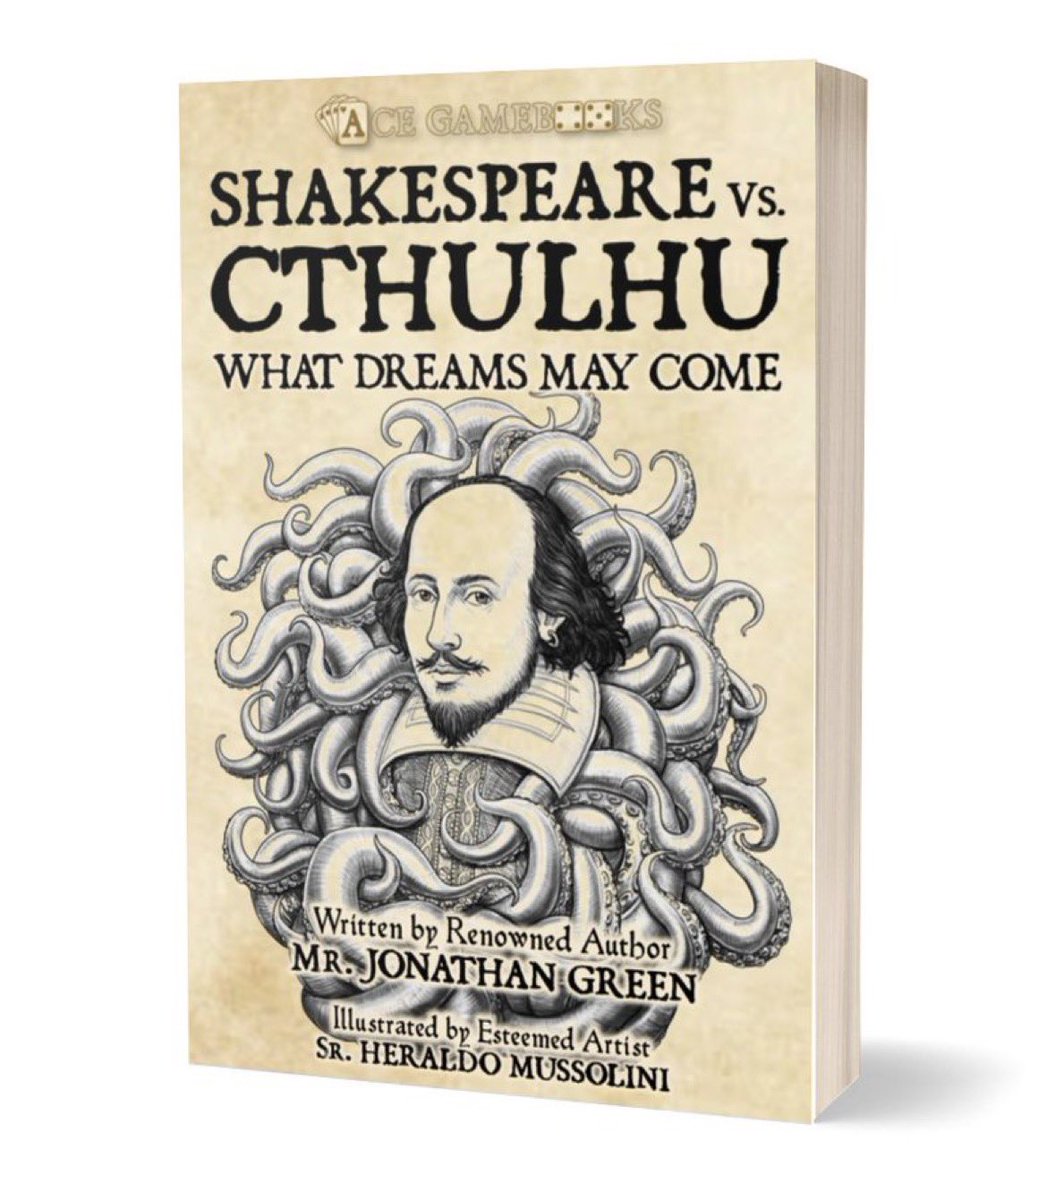 This looks fun - Shakespeare Vs. Cthulhu: What Dreams May Come by Jonathan Green @jonathangreen on @Kickstarter #ShakespeareDay #PleaseShare kickstarter.com/projects/jonat…